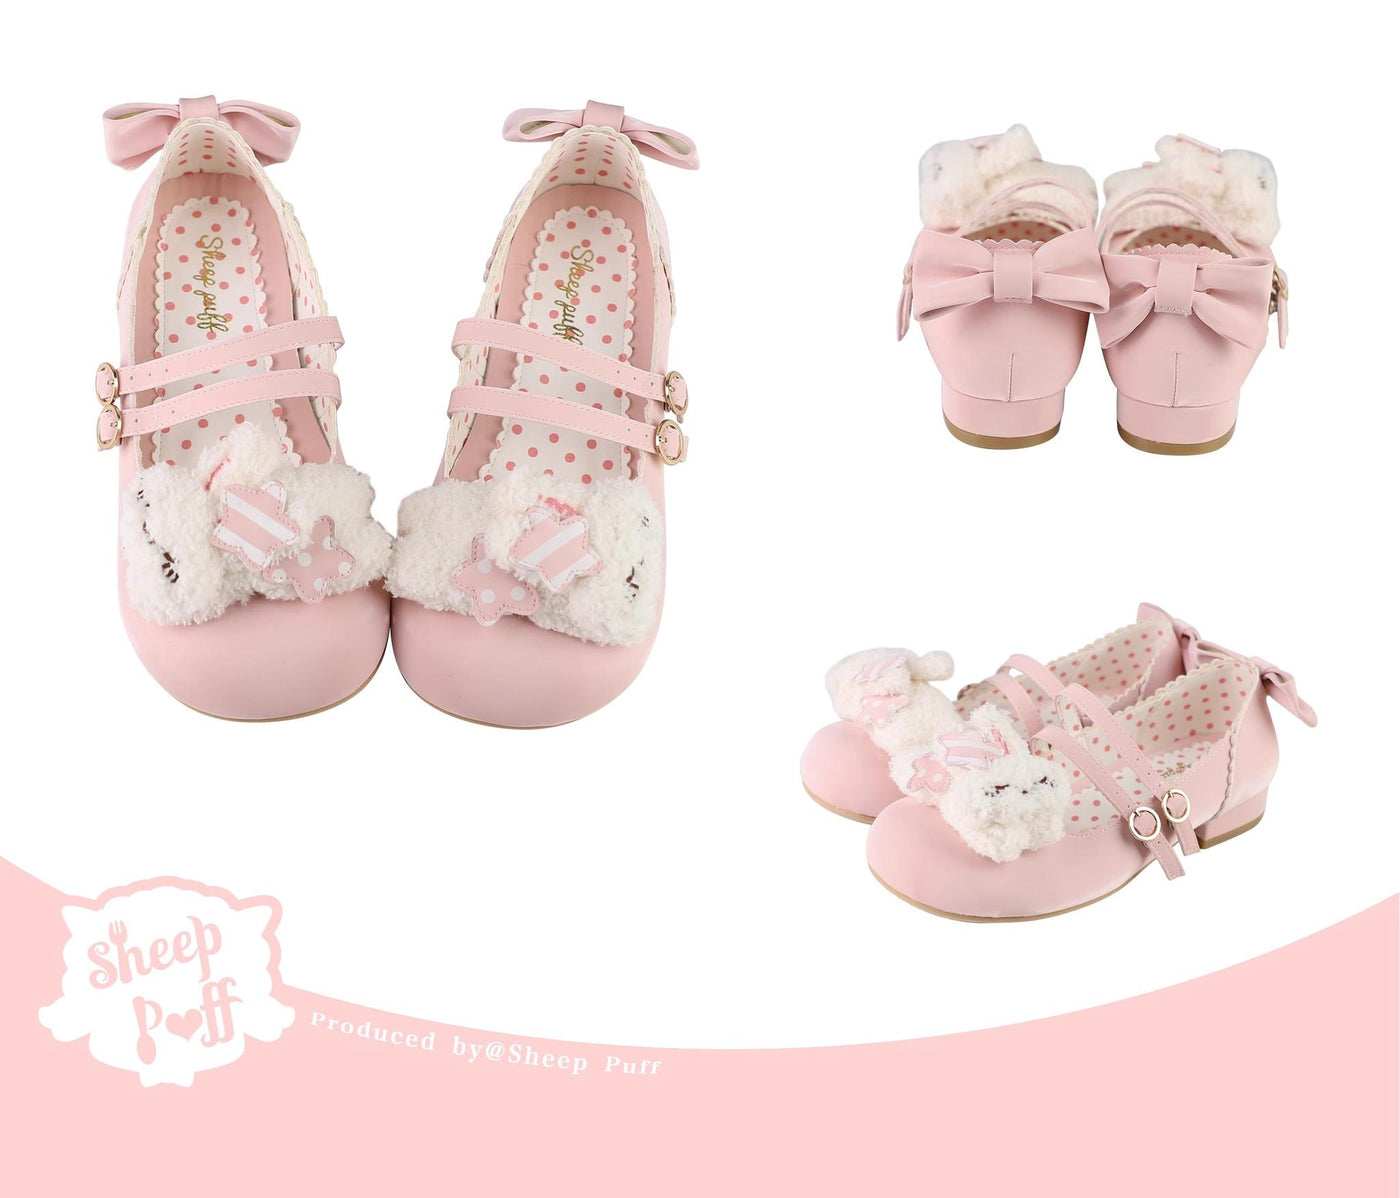 Sheep Puff~Mimitty Rabbit~Kawaii Lolita Low Heel Shoes Plush Bunny Spring Lolita Shoes Pink 34 